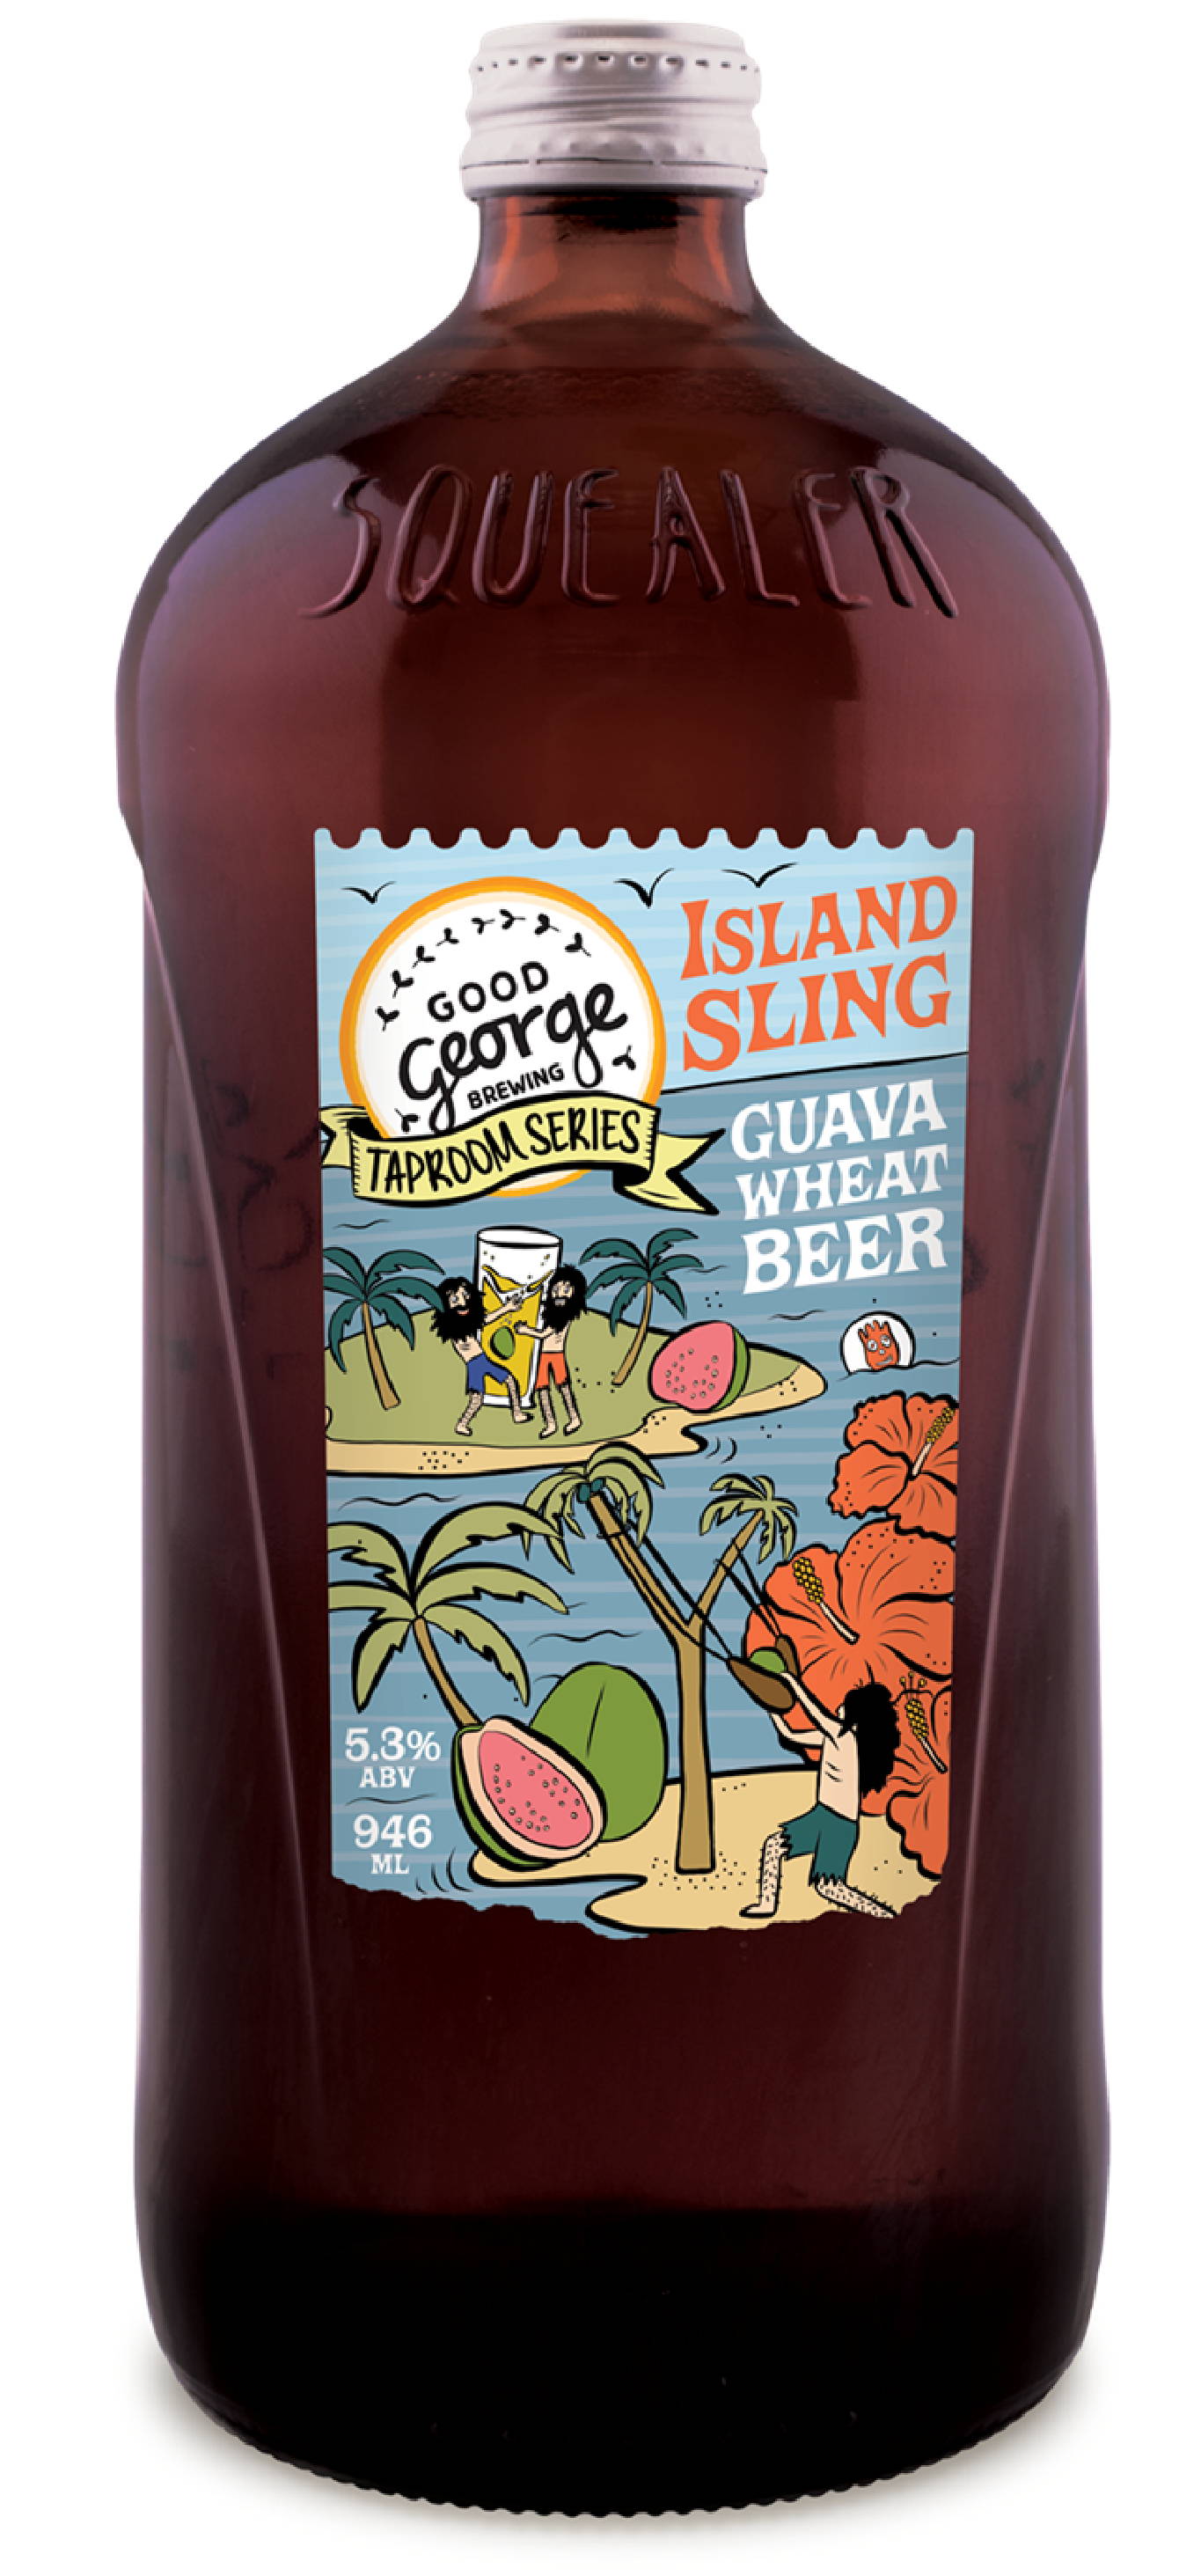 Good George Island Sling Guava Wheat Beer